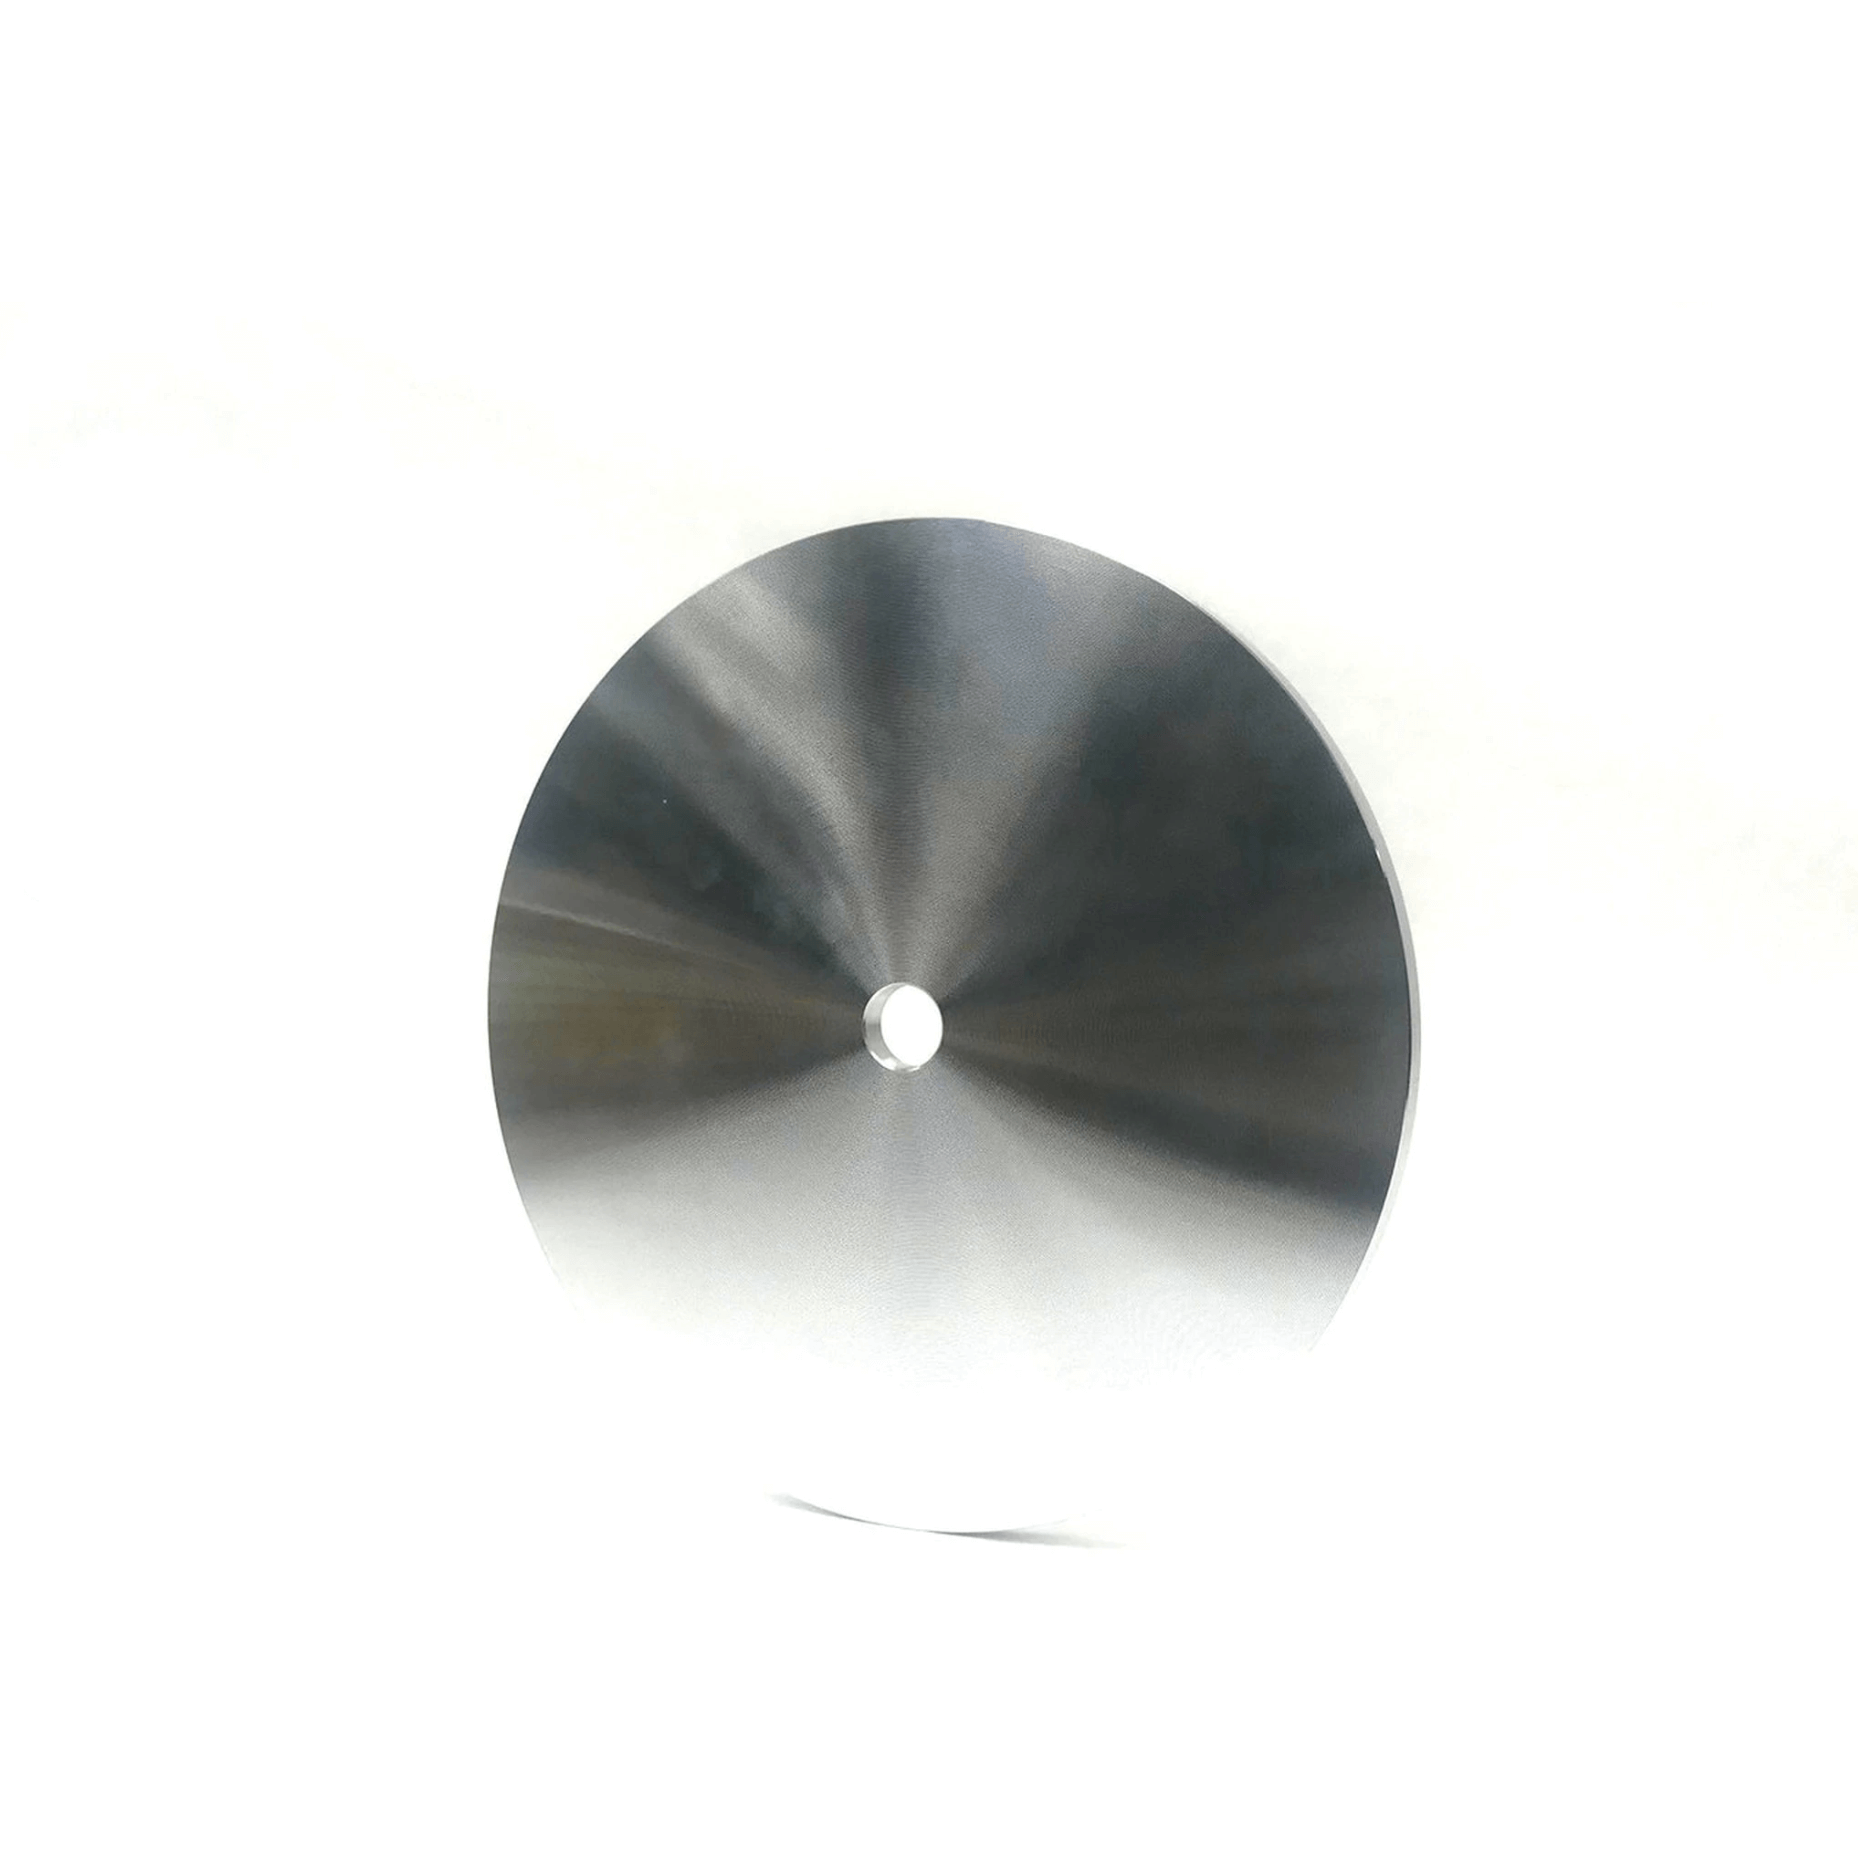 BAHCO - Grattoir plat antidéflagrant en aluminium bronze, 30 mm